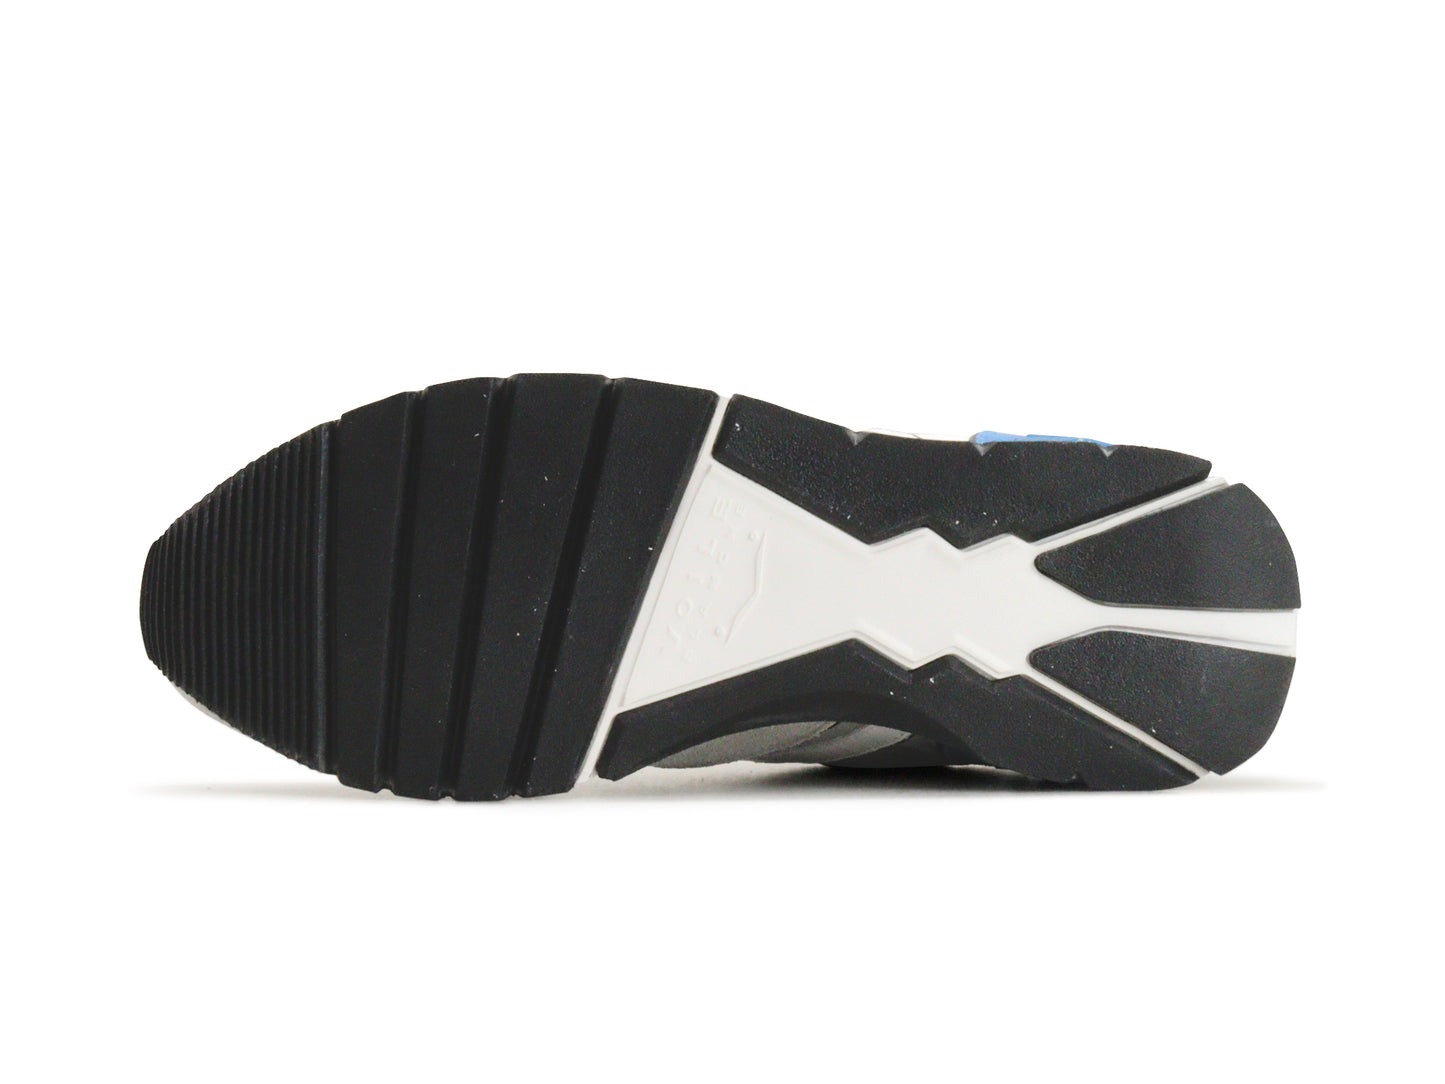 Voile Blancheのスニーカー「03/1c55」の靴底の商品画像